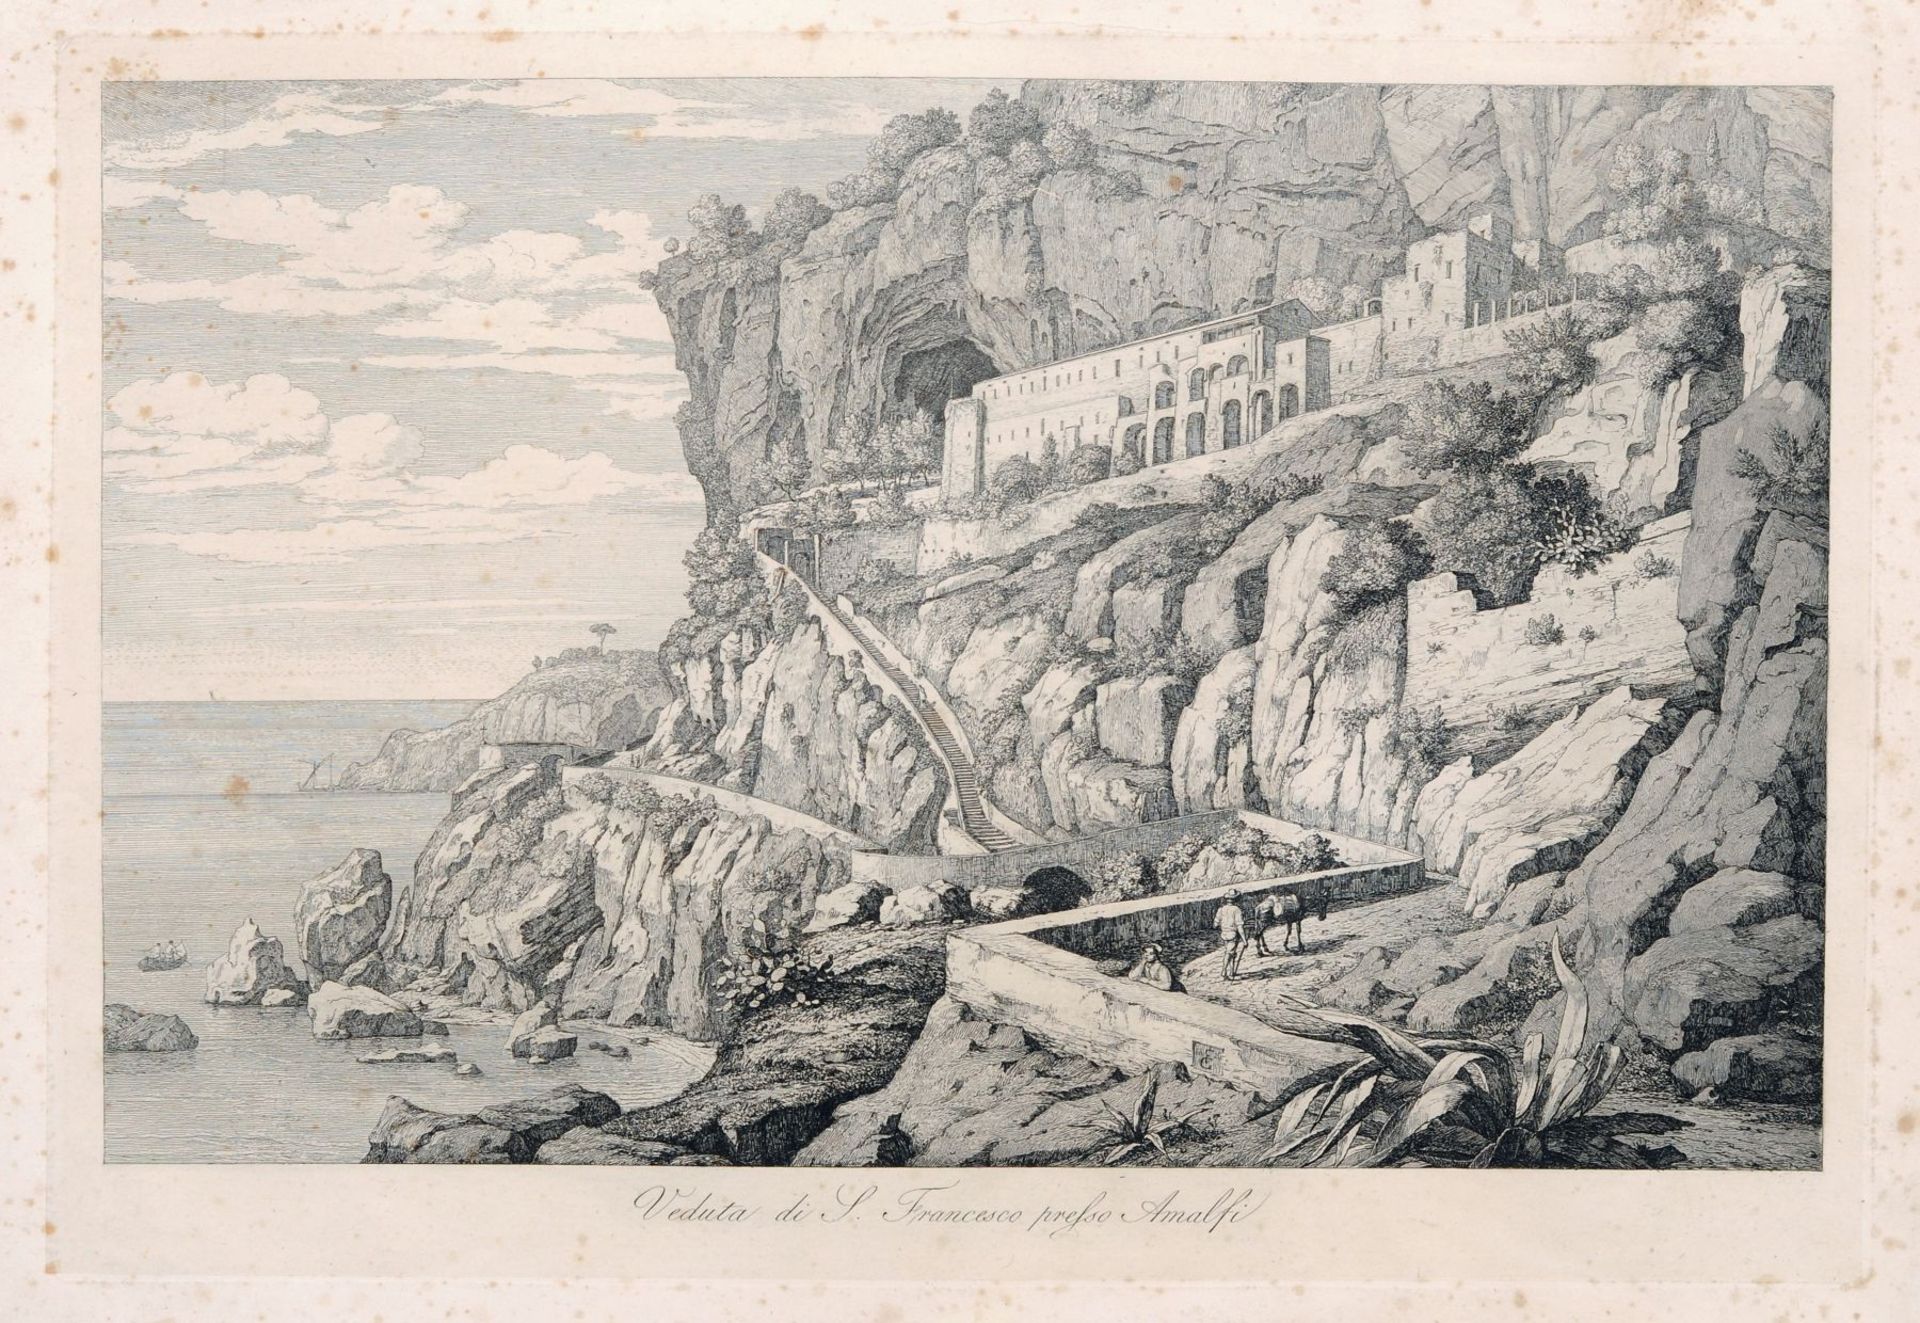 Florian Grospietsch "Veduta di S. Francesco presso Amalfi". 1826. Florian Grospietsch 1789 Protzan 